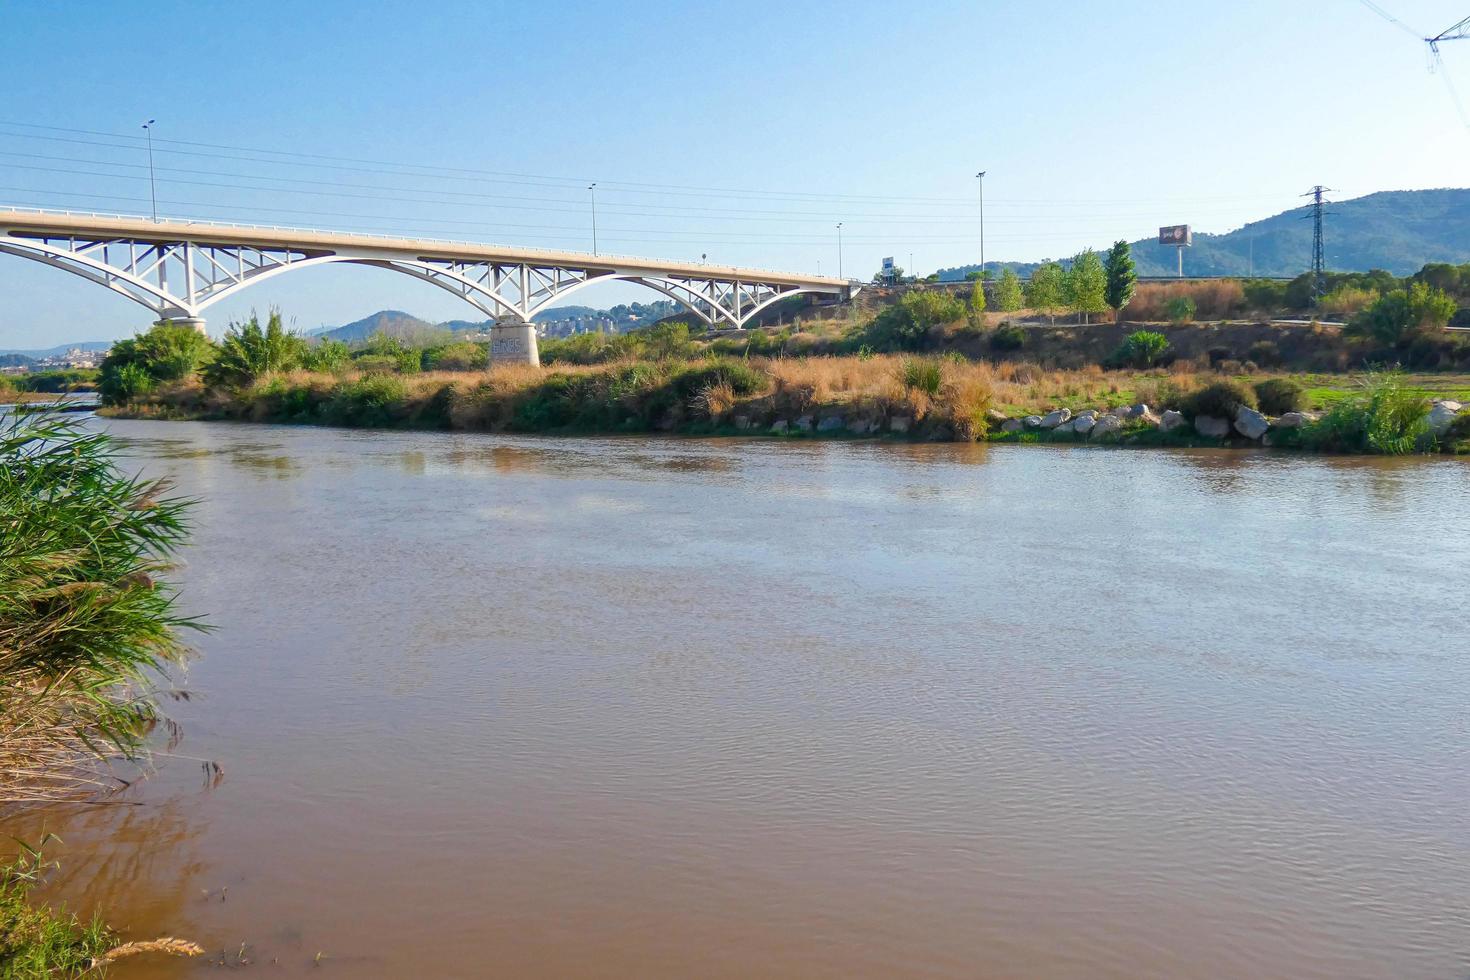 río llobregat y el puente que cruza el río en sant feliu de llobregat foto